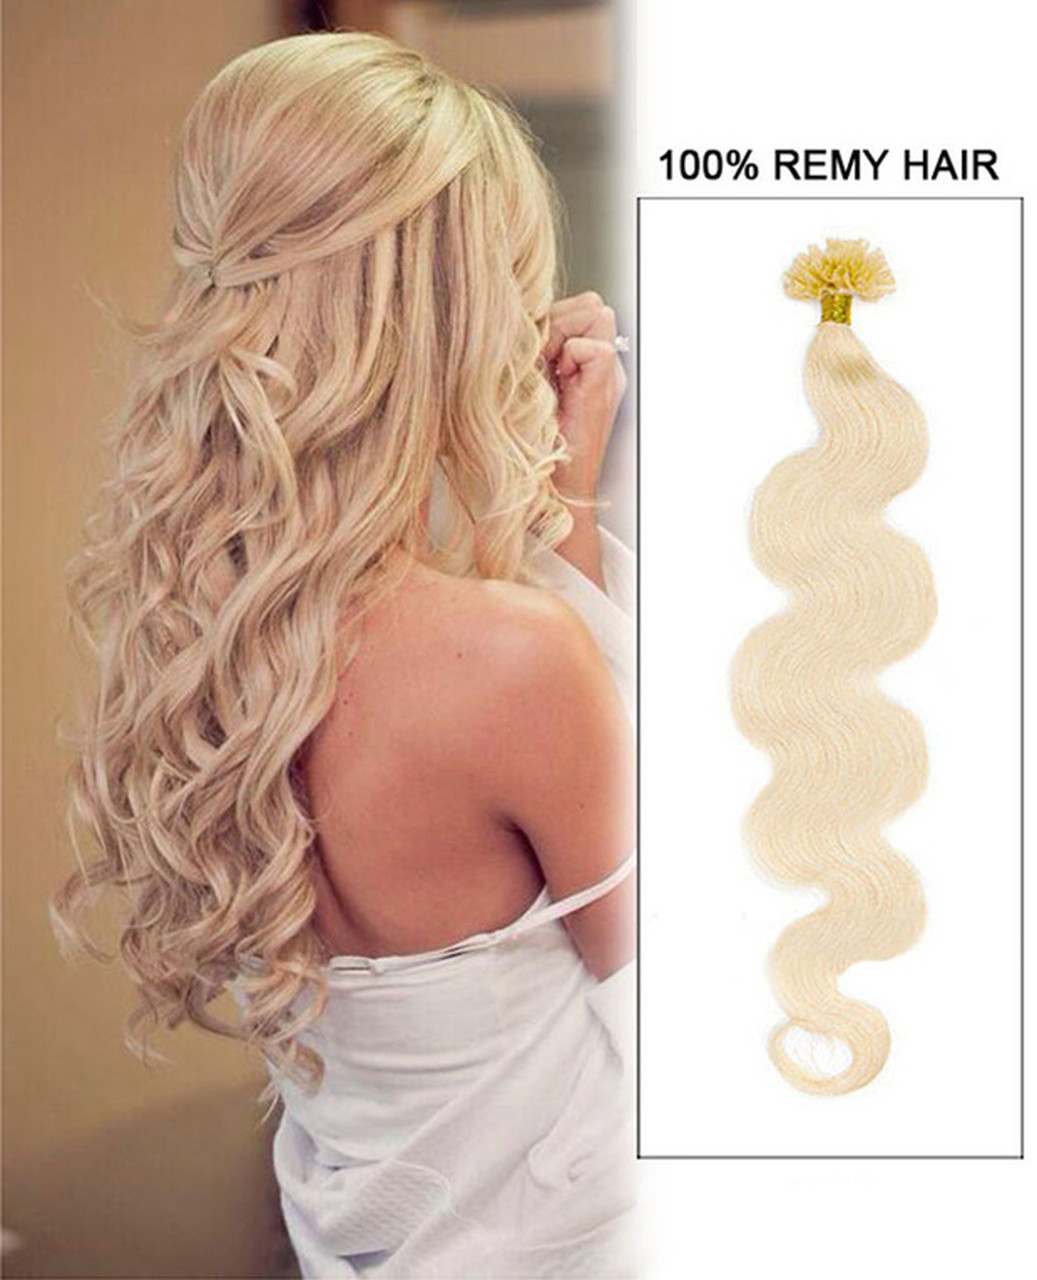 100%remy hair  |  Remeehi